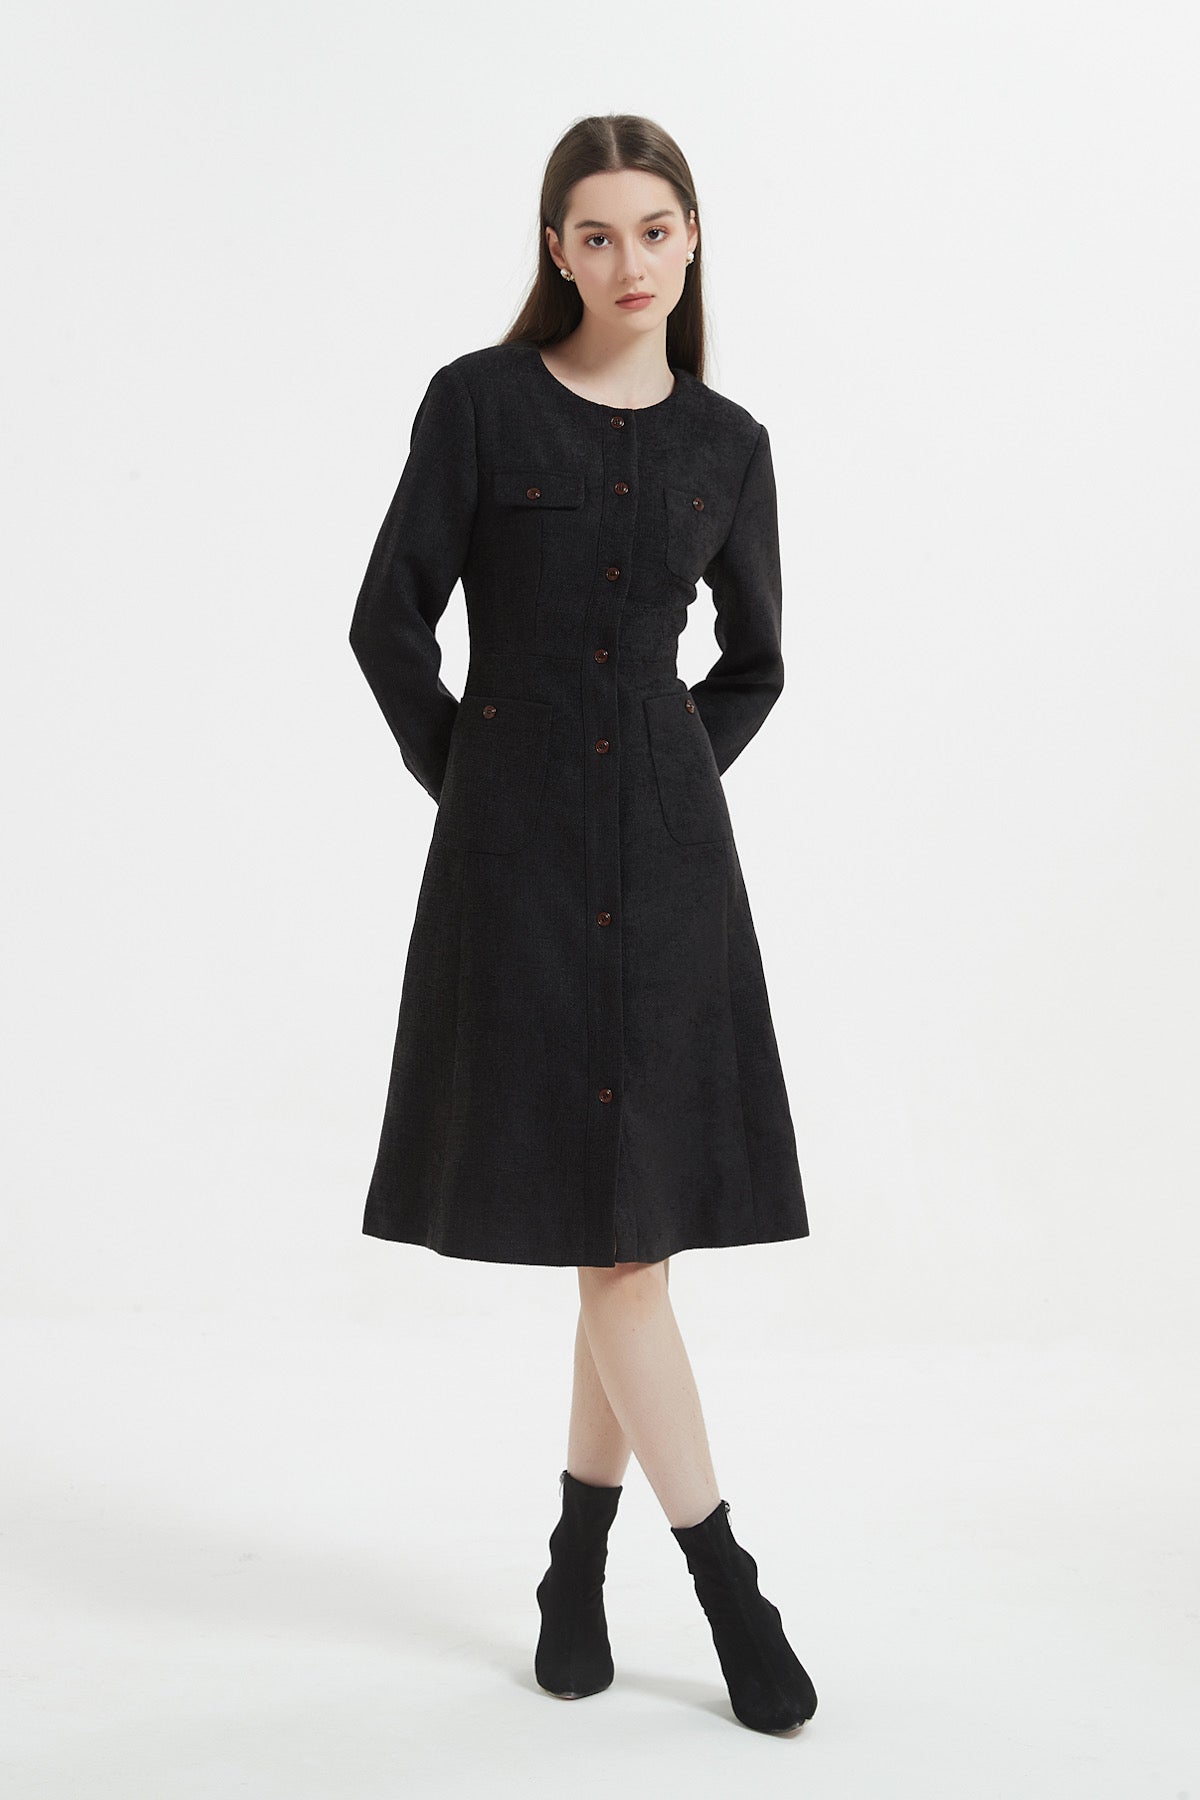 SKYE Shop Chic Modern Elegant Timeless Women Clothing French Parisian Minimalist Emilia Dress black